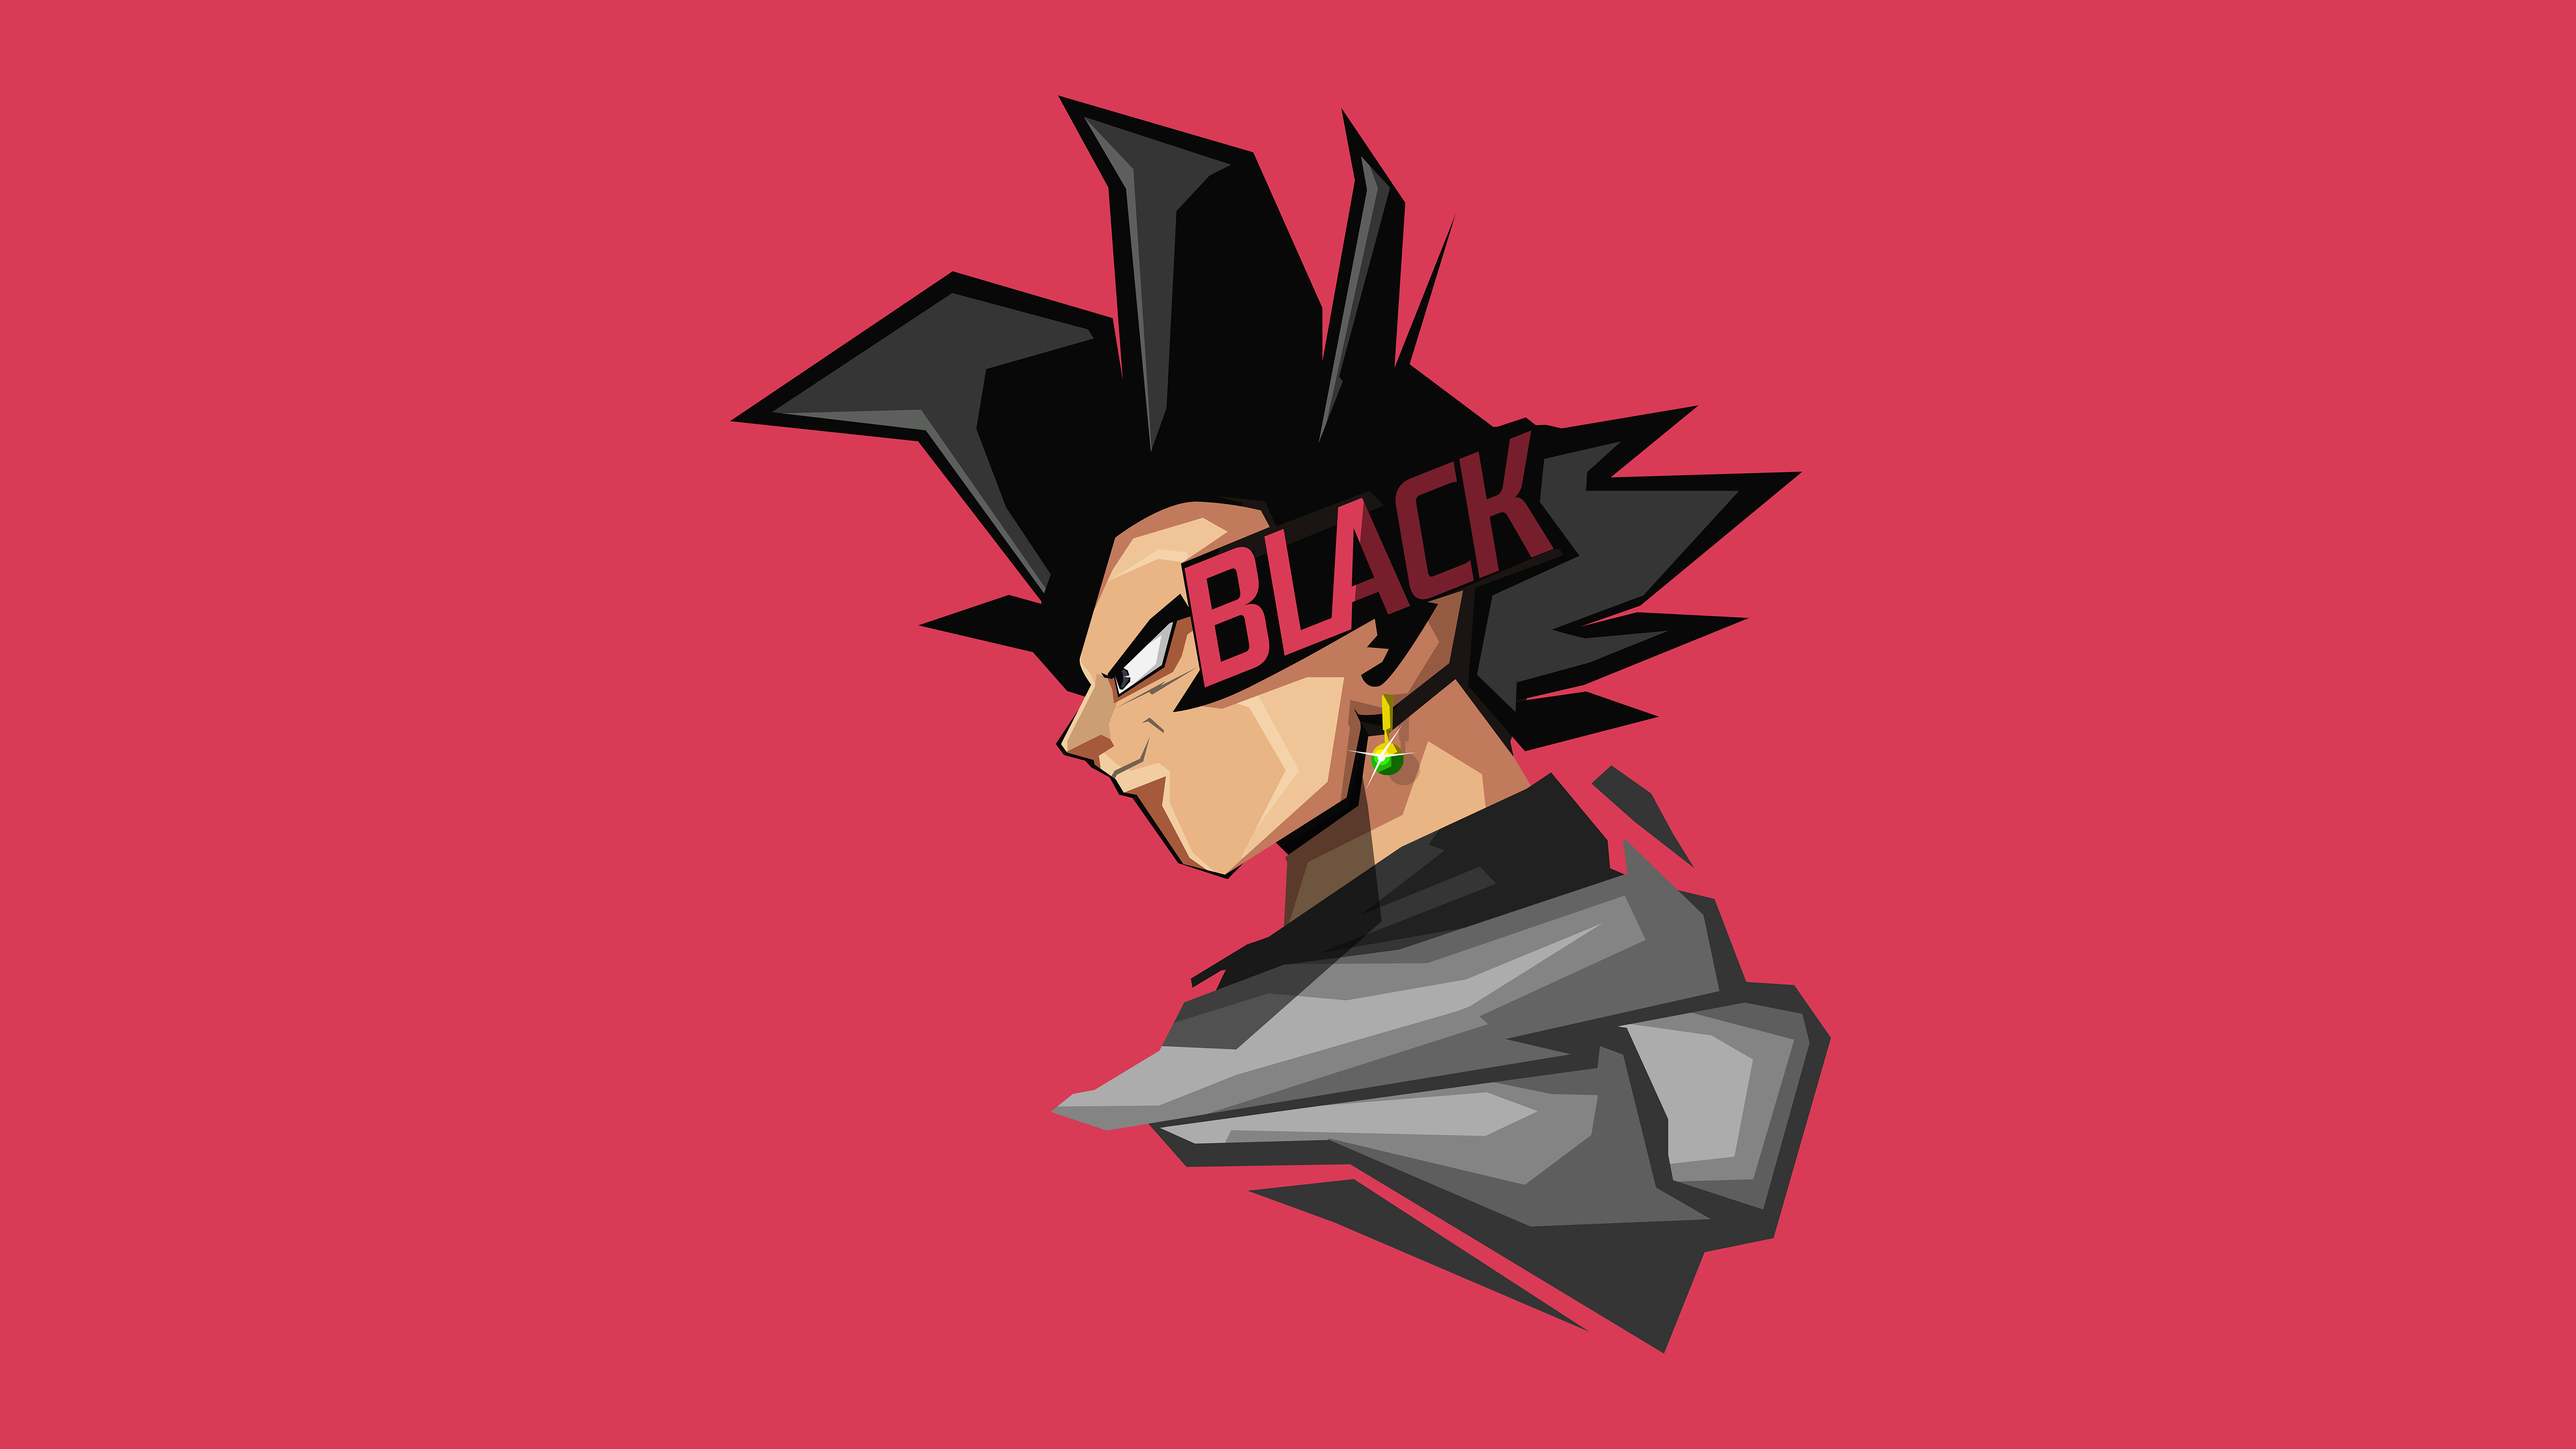 Goku Black Minimal Artwork 4K 8K